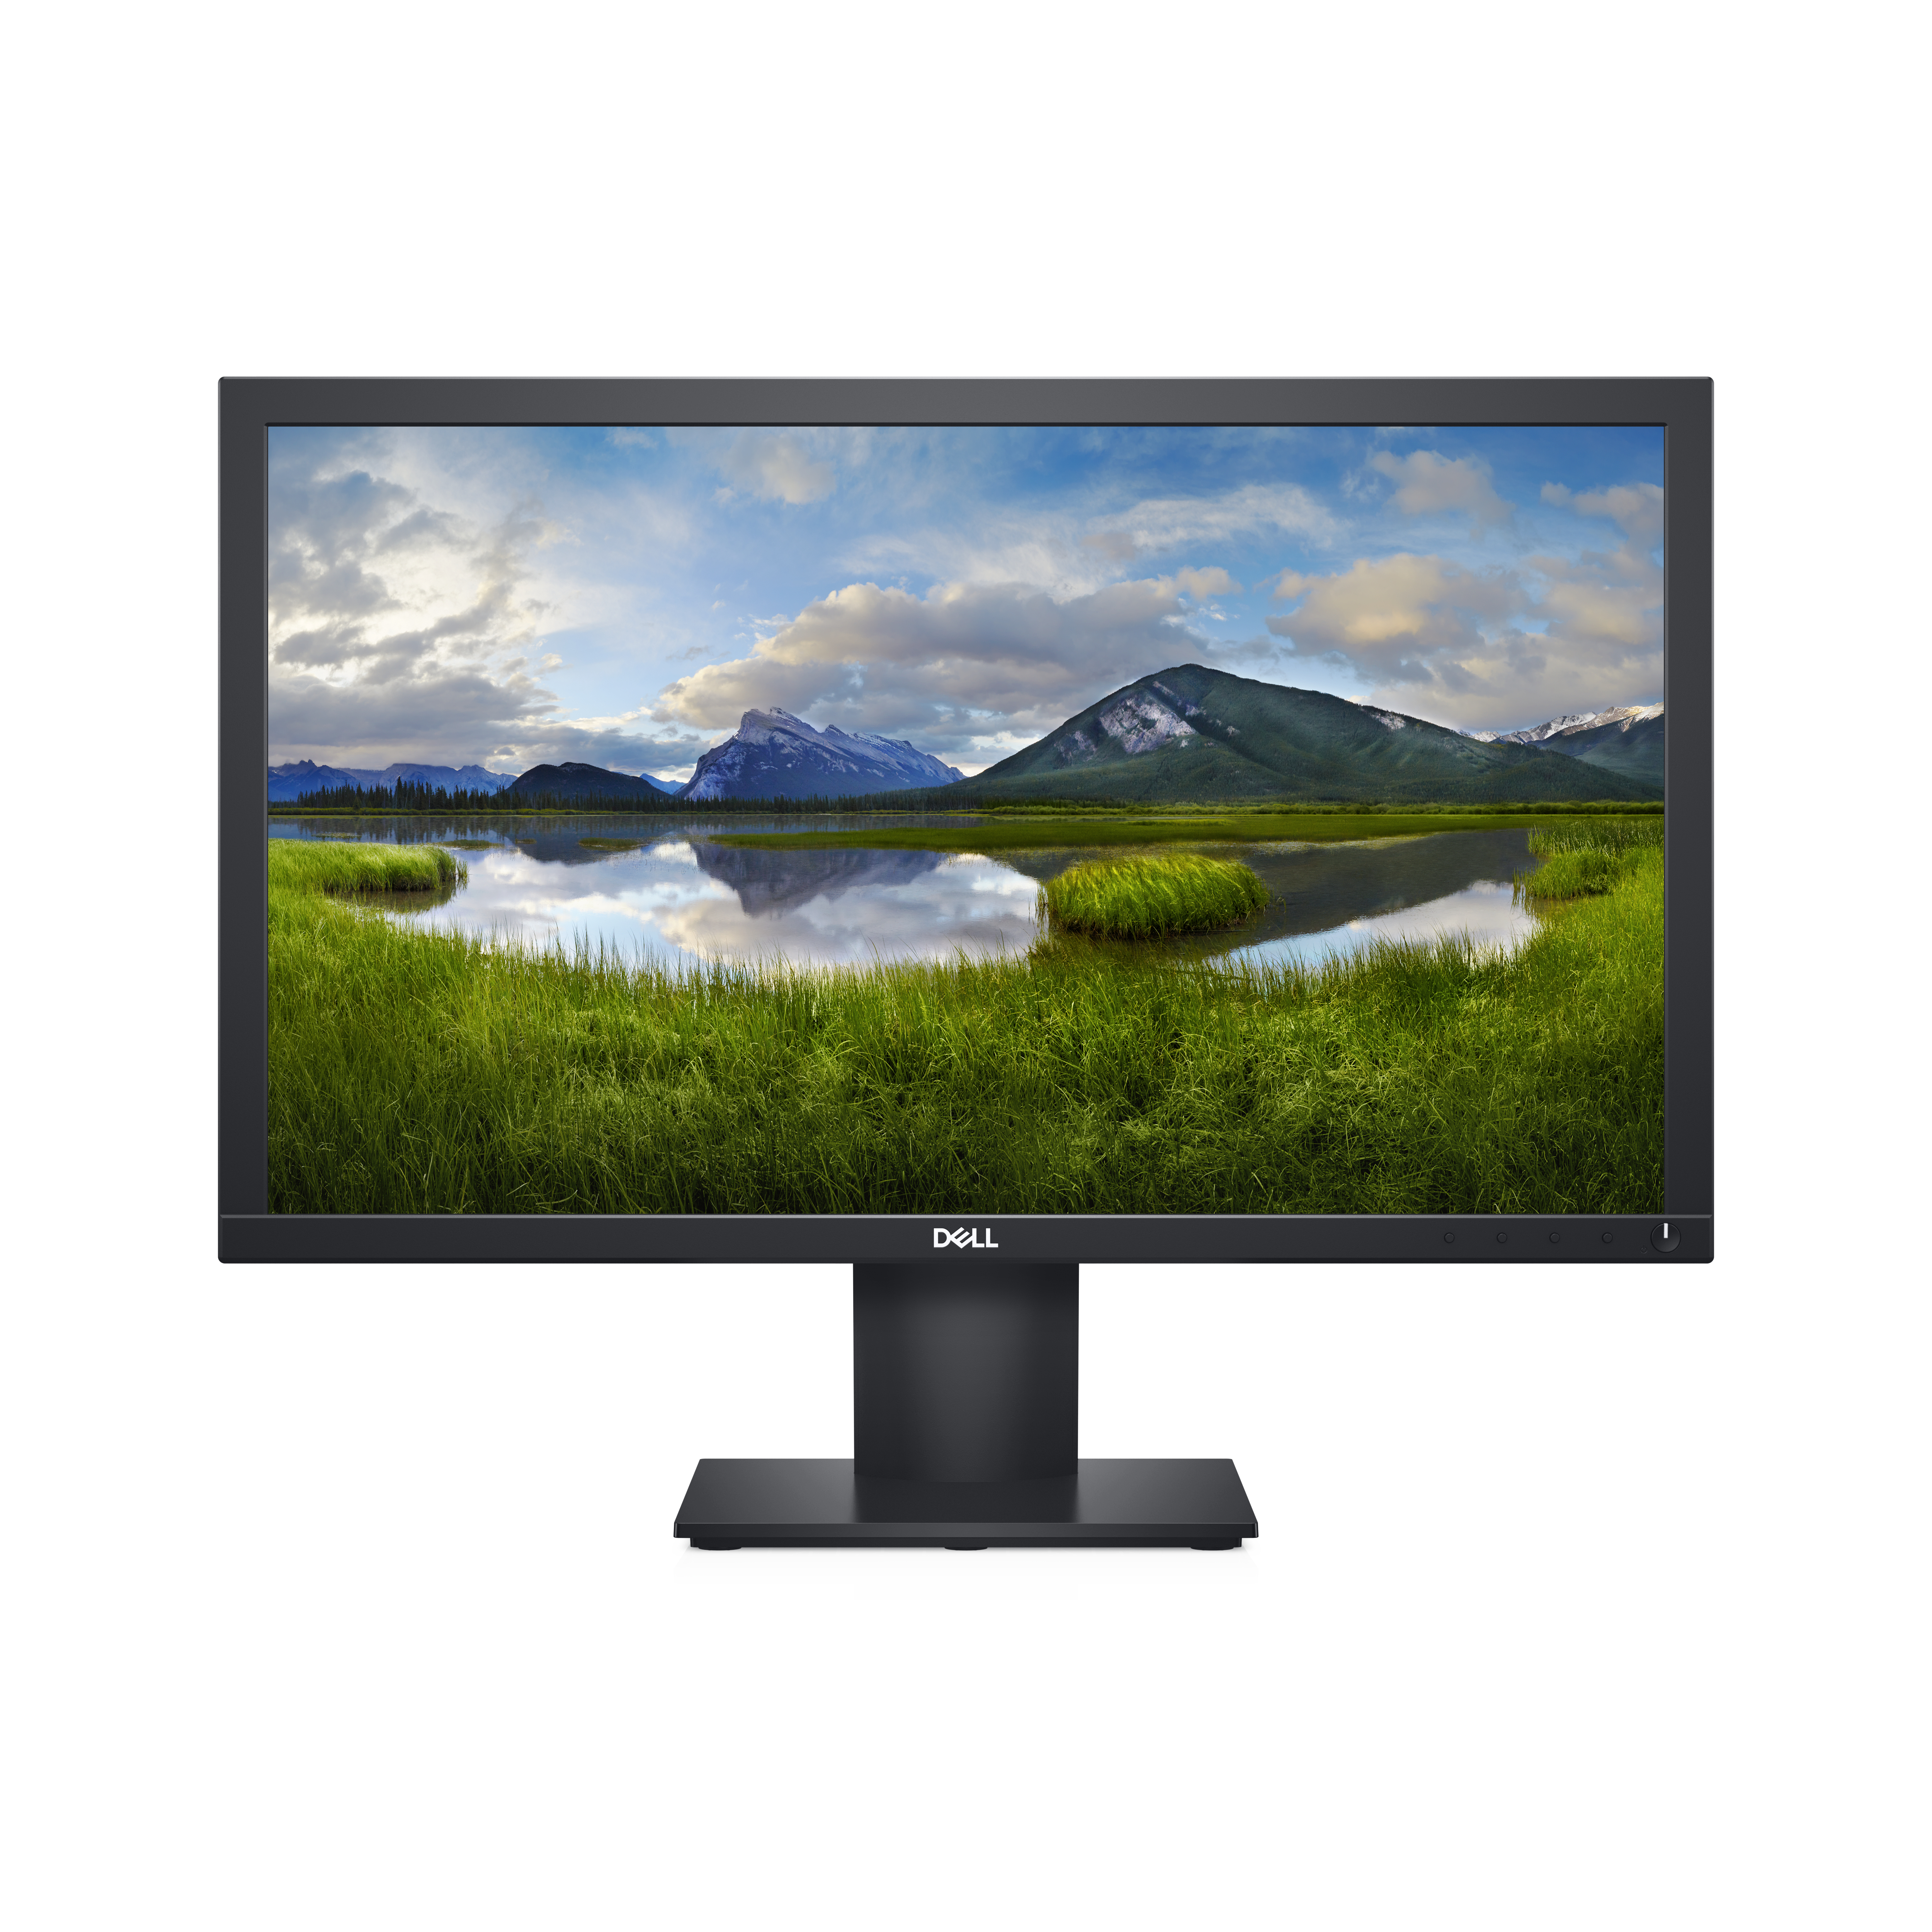 Dell E Series E2220H - 55,9 cm (22 Zoll) - 1920 x 1080 Pixel - Full HD - LCD - 5 ms - Schwarz